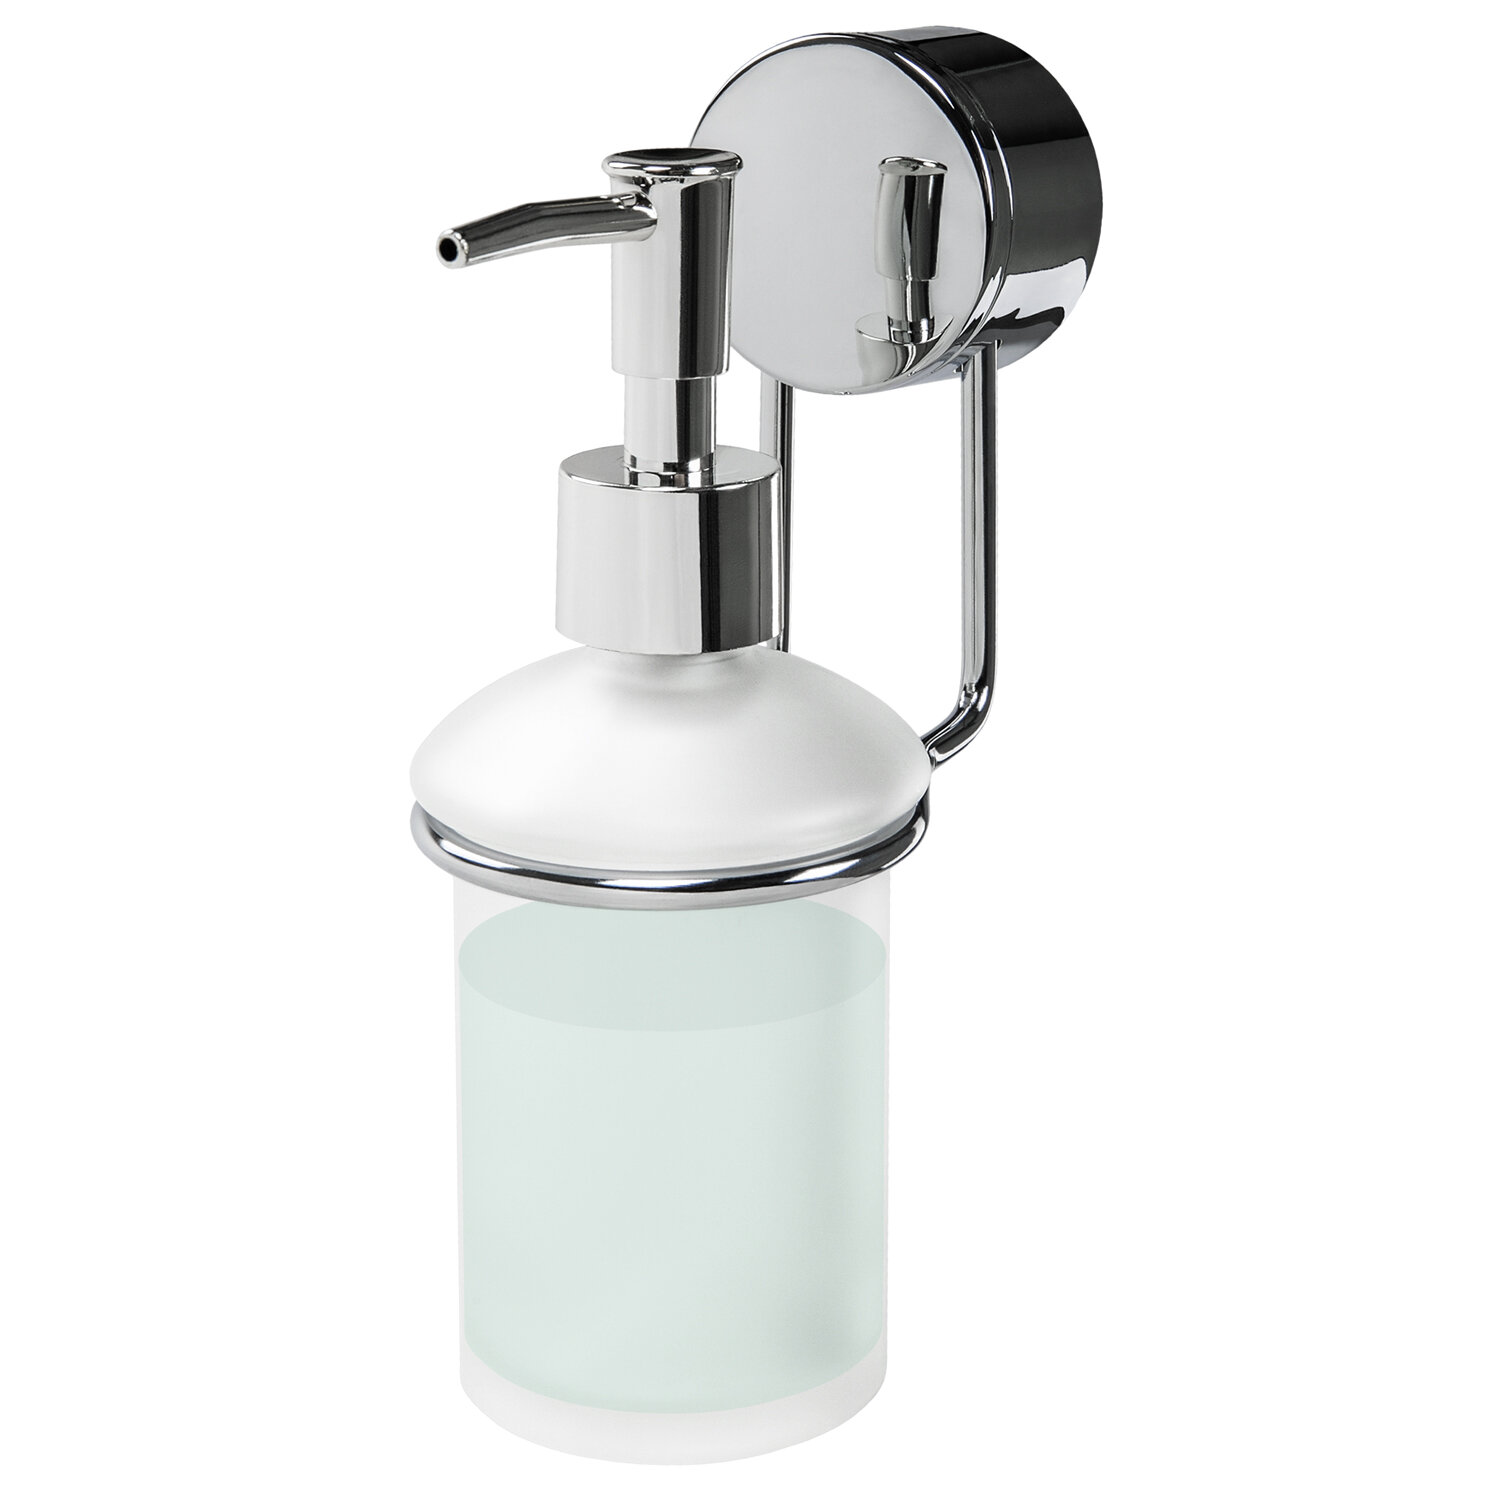 Диспенсер для жидкого мыла LAIMA, металл/стекло, 300 мл, белый/прозрачный (607427), цвет белый/прозрачный